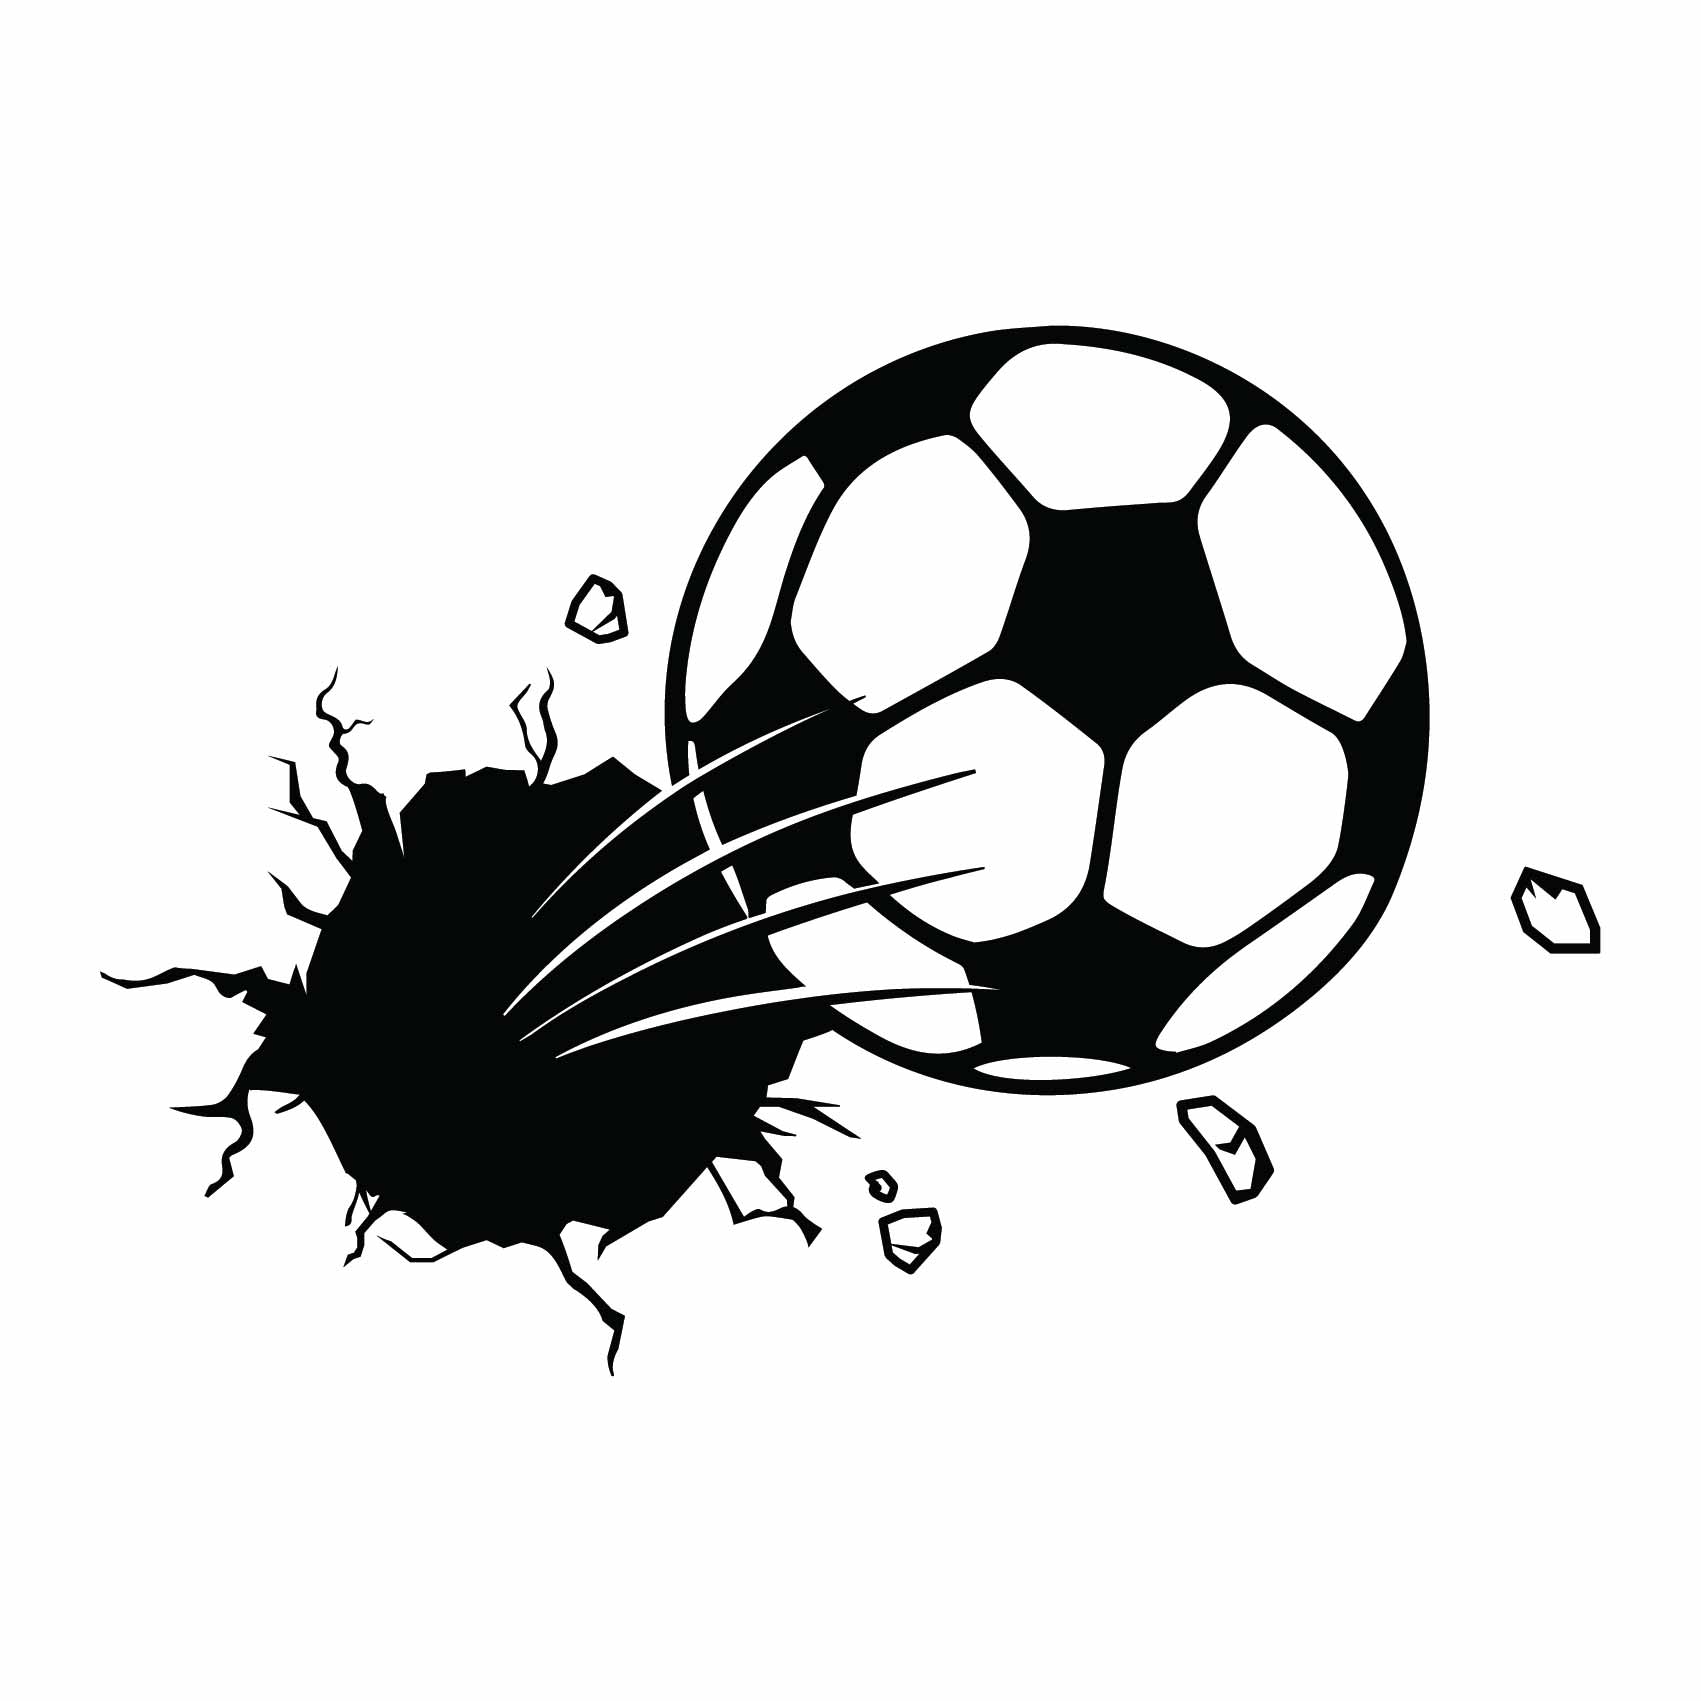 stickers-ballon-foot-ref45sport-stickers-muraux-sport-autocollant-deco-enfant-salon-chambre-sticker-mural-football-decoration-(2)